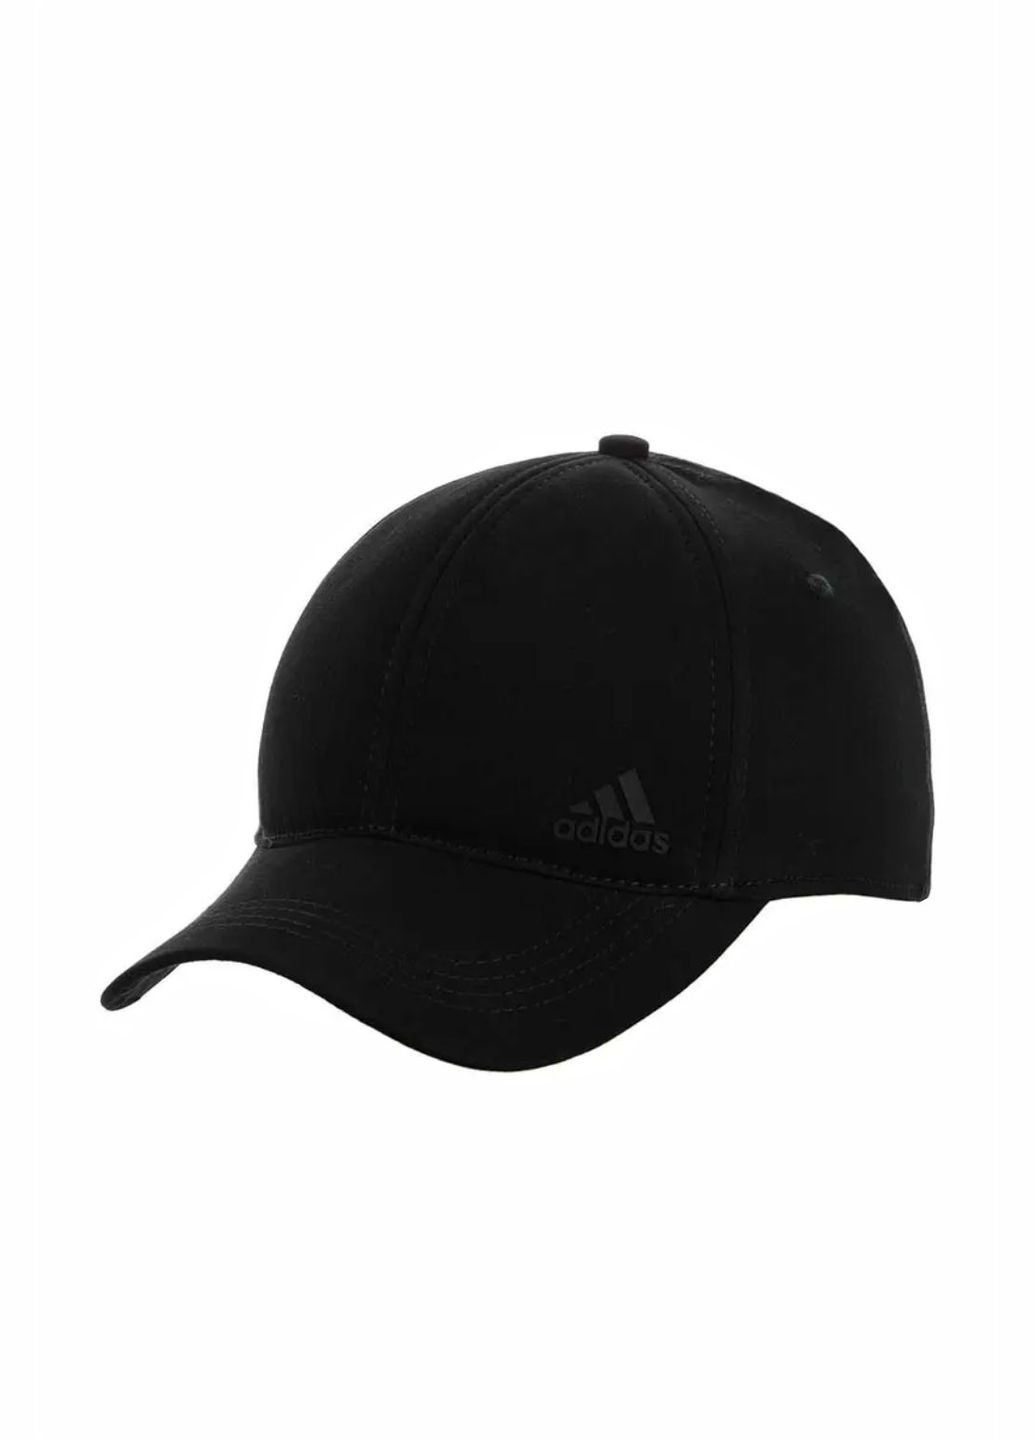 Кепка чоловіча із стреч-котону Adidas / Адідас No Brand чоловіча кепка закрита (280929040)